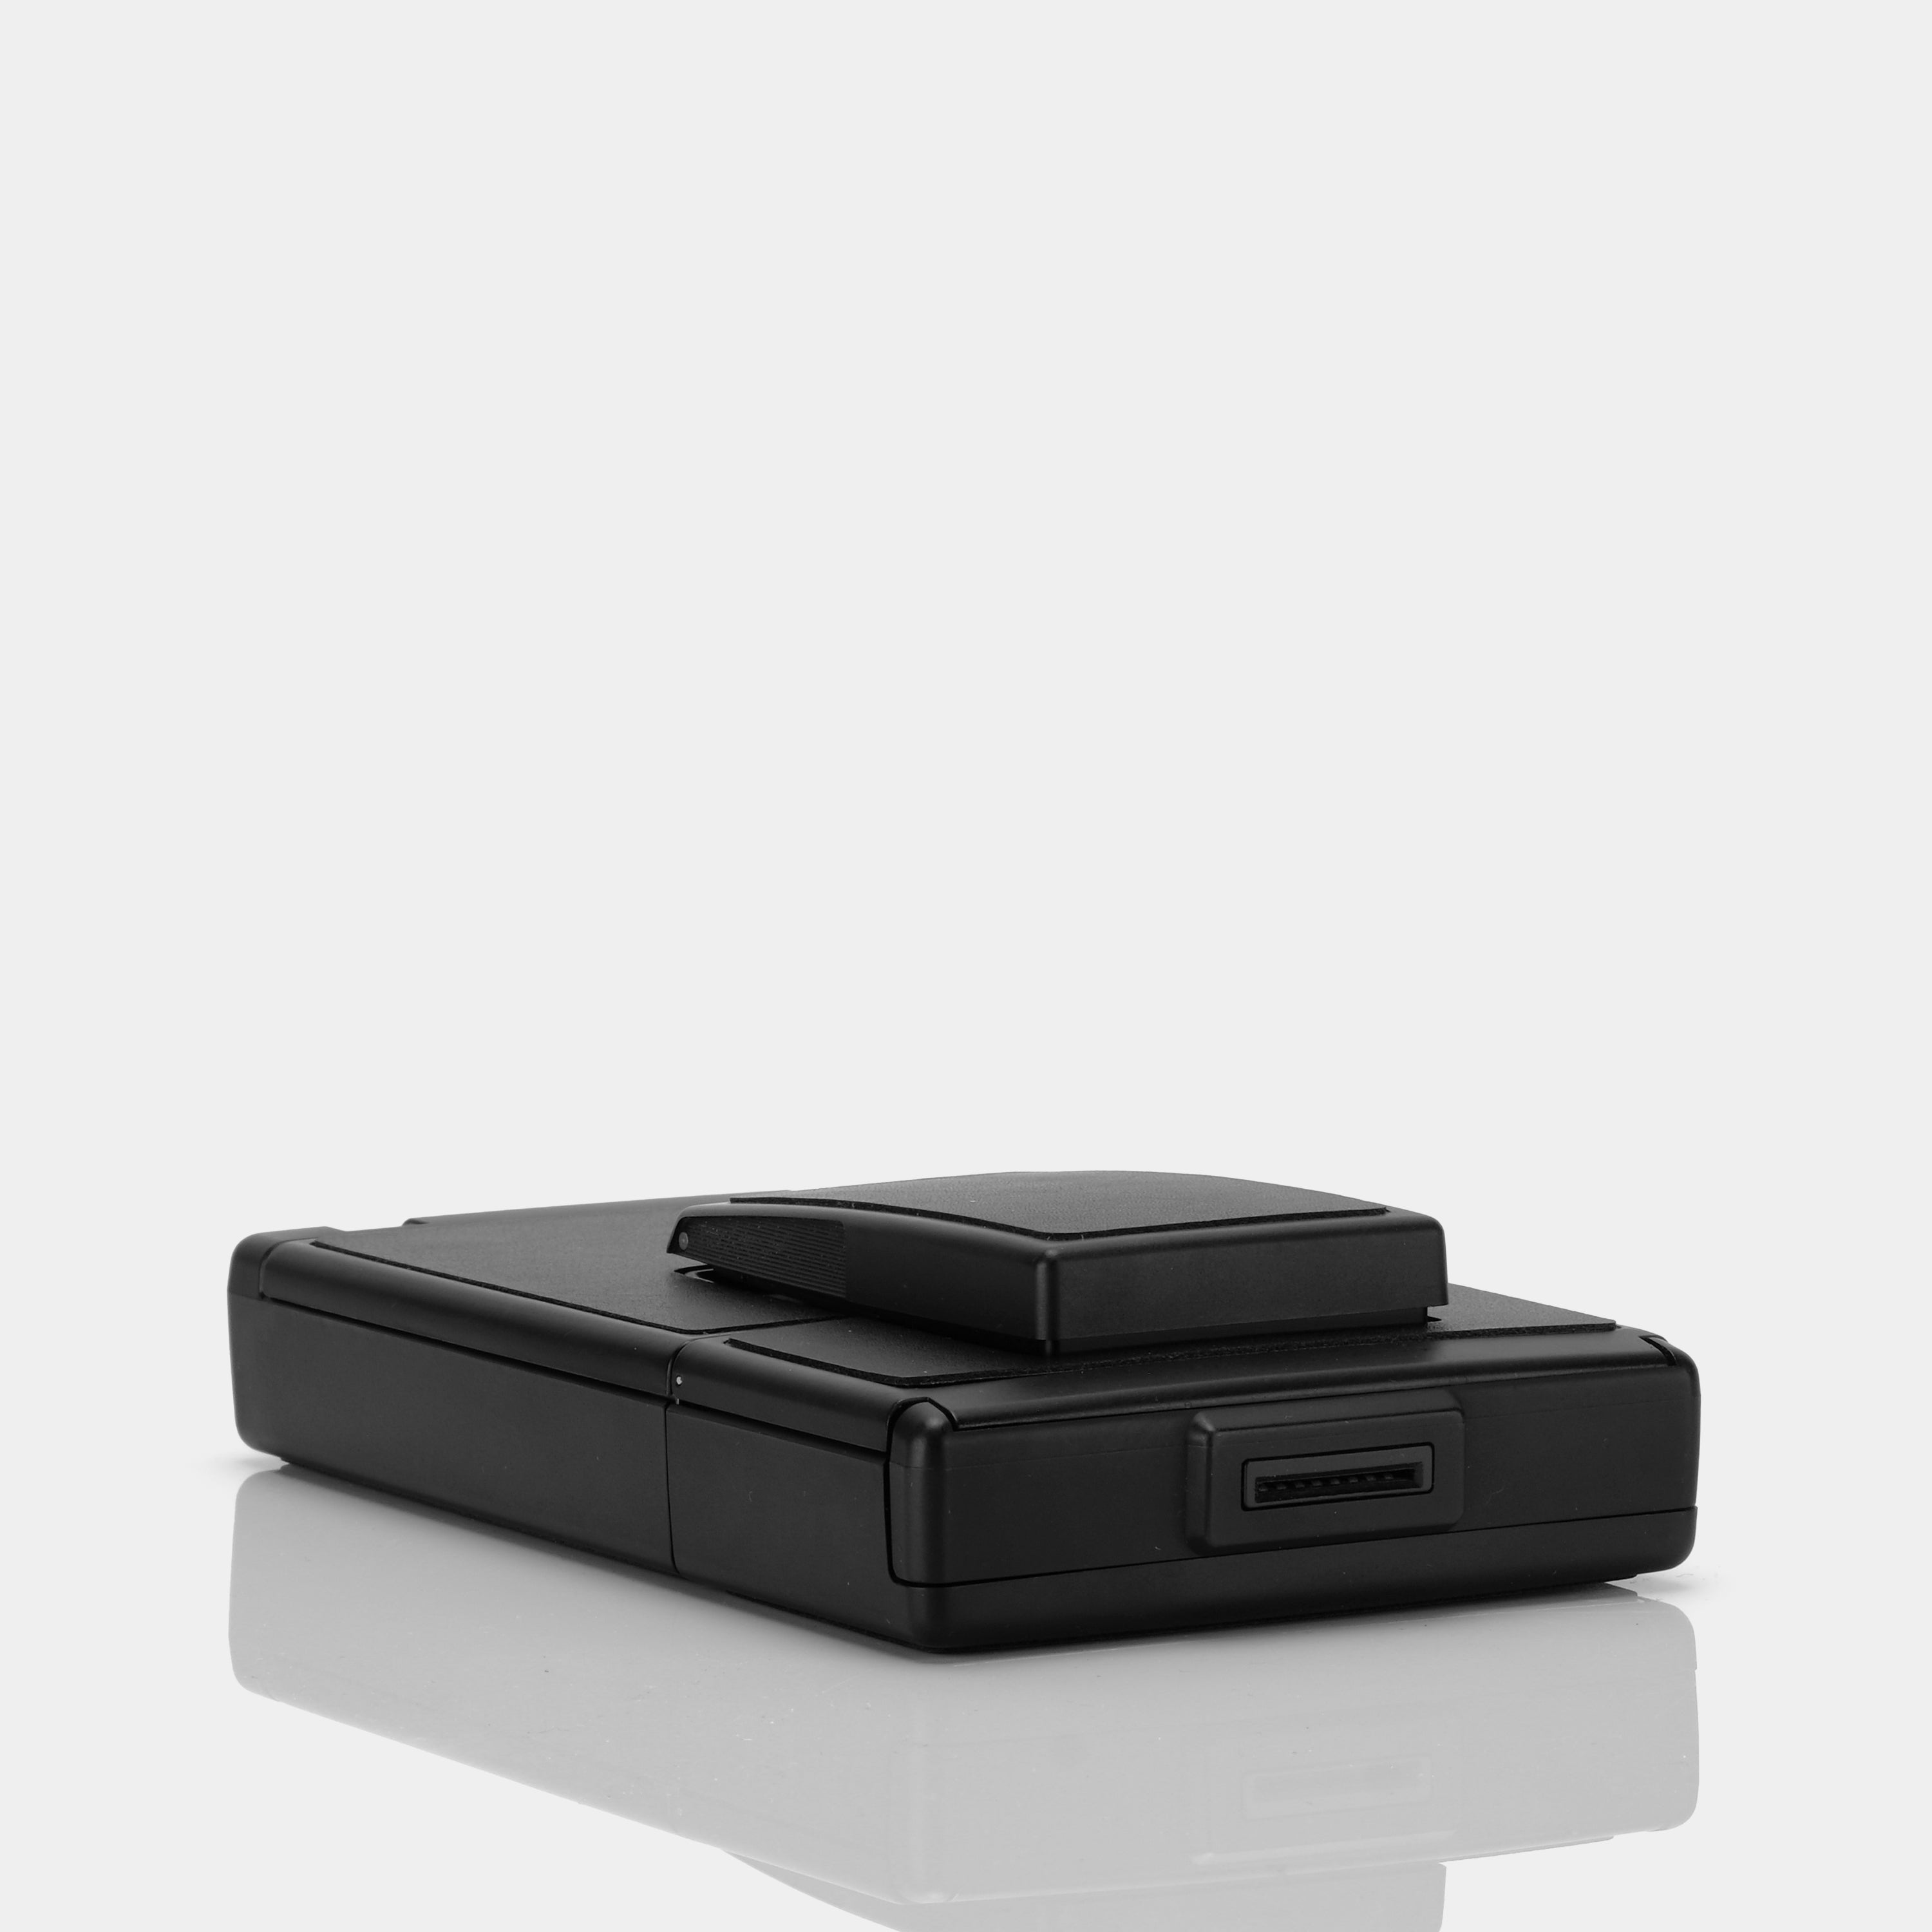 Polaroid SX-70 Alpha 1 SE Black Folding Instant Film Camera